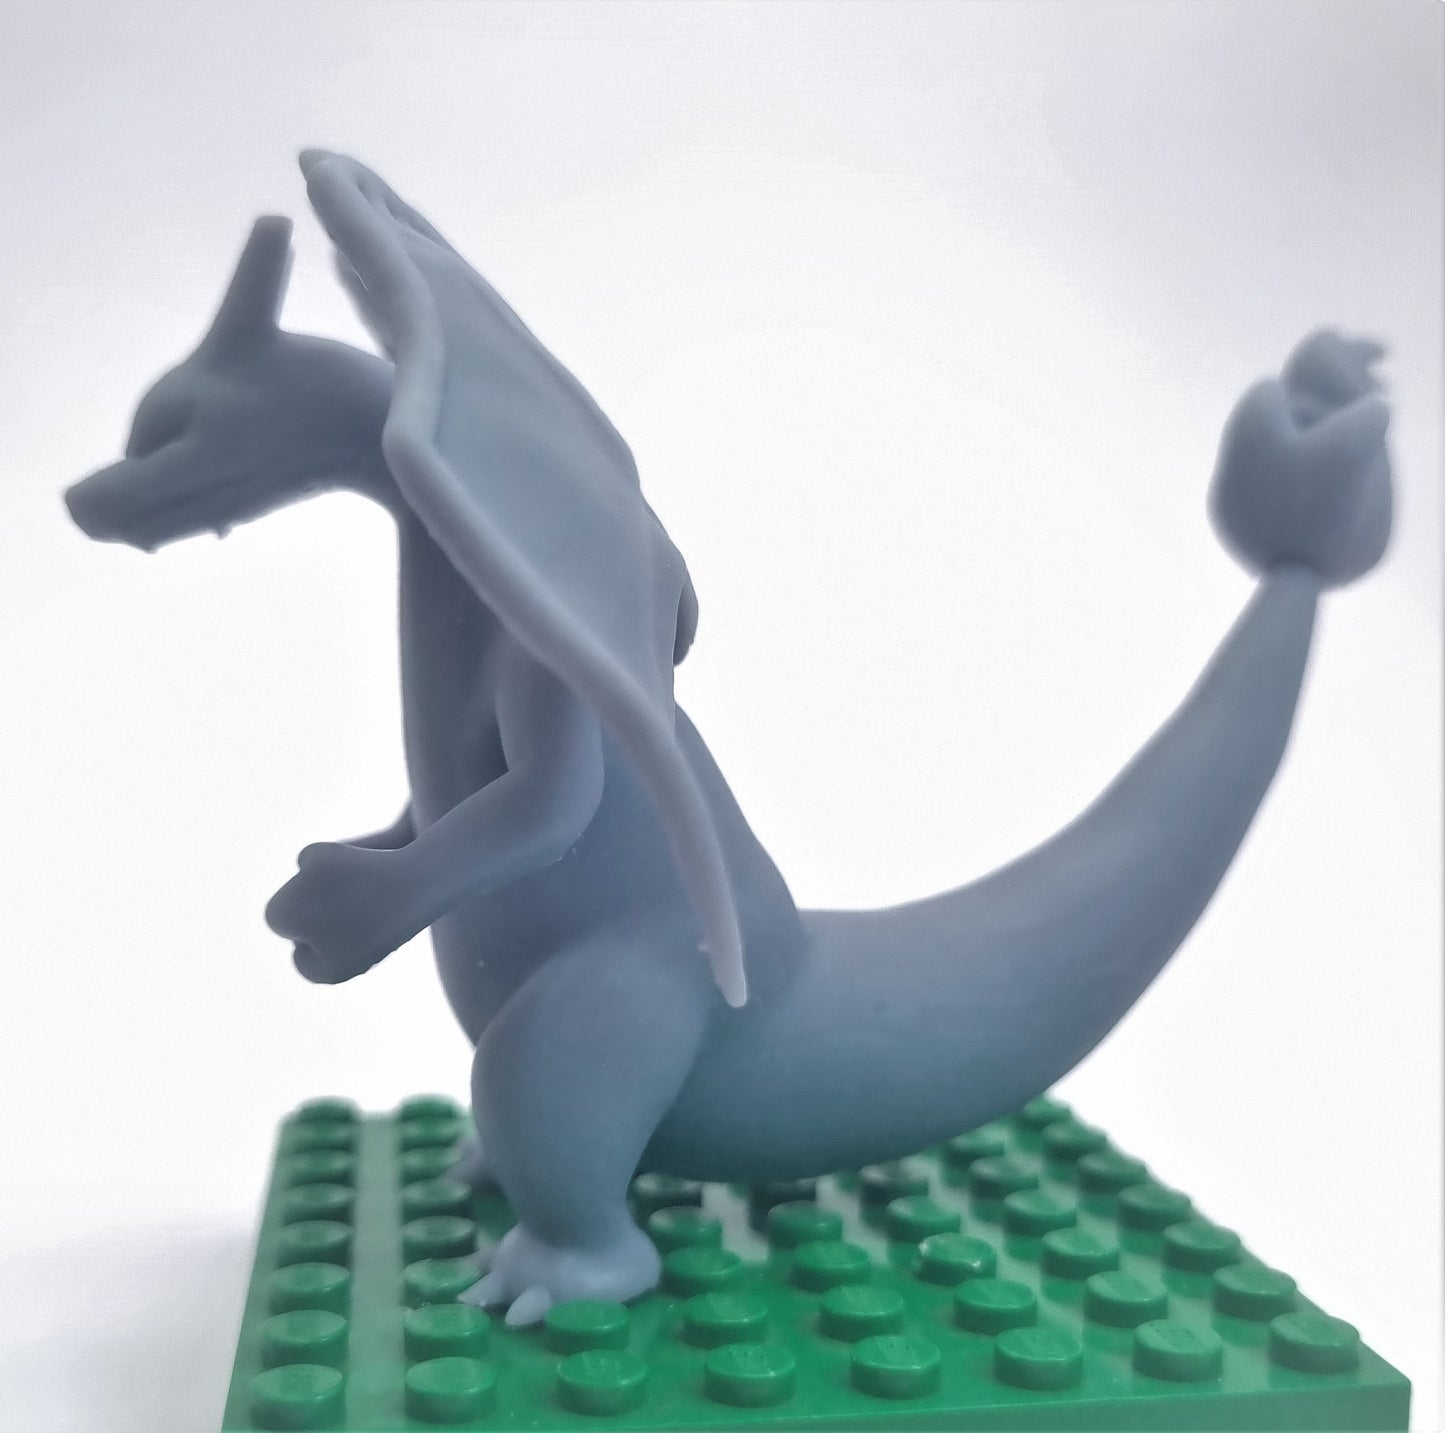 Lego compatible custom 3D printed fire dragon!